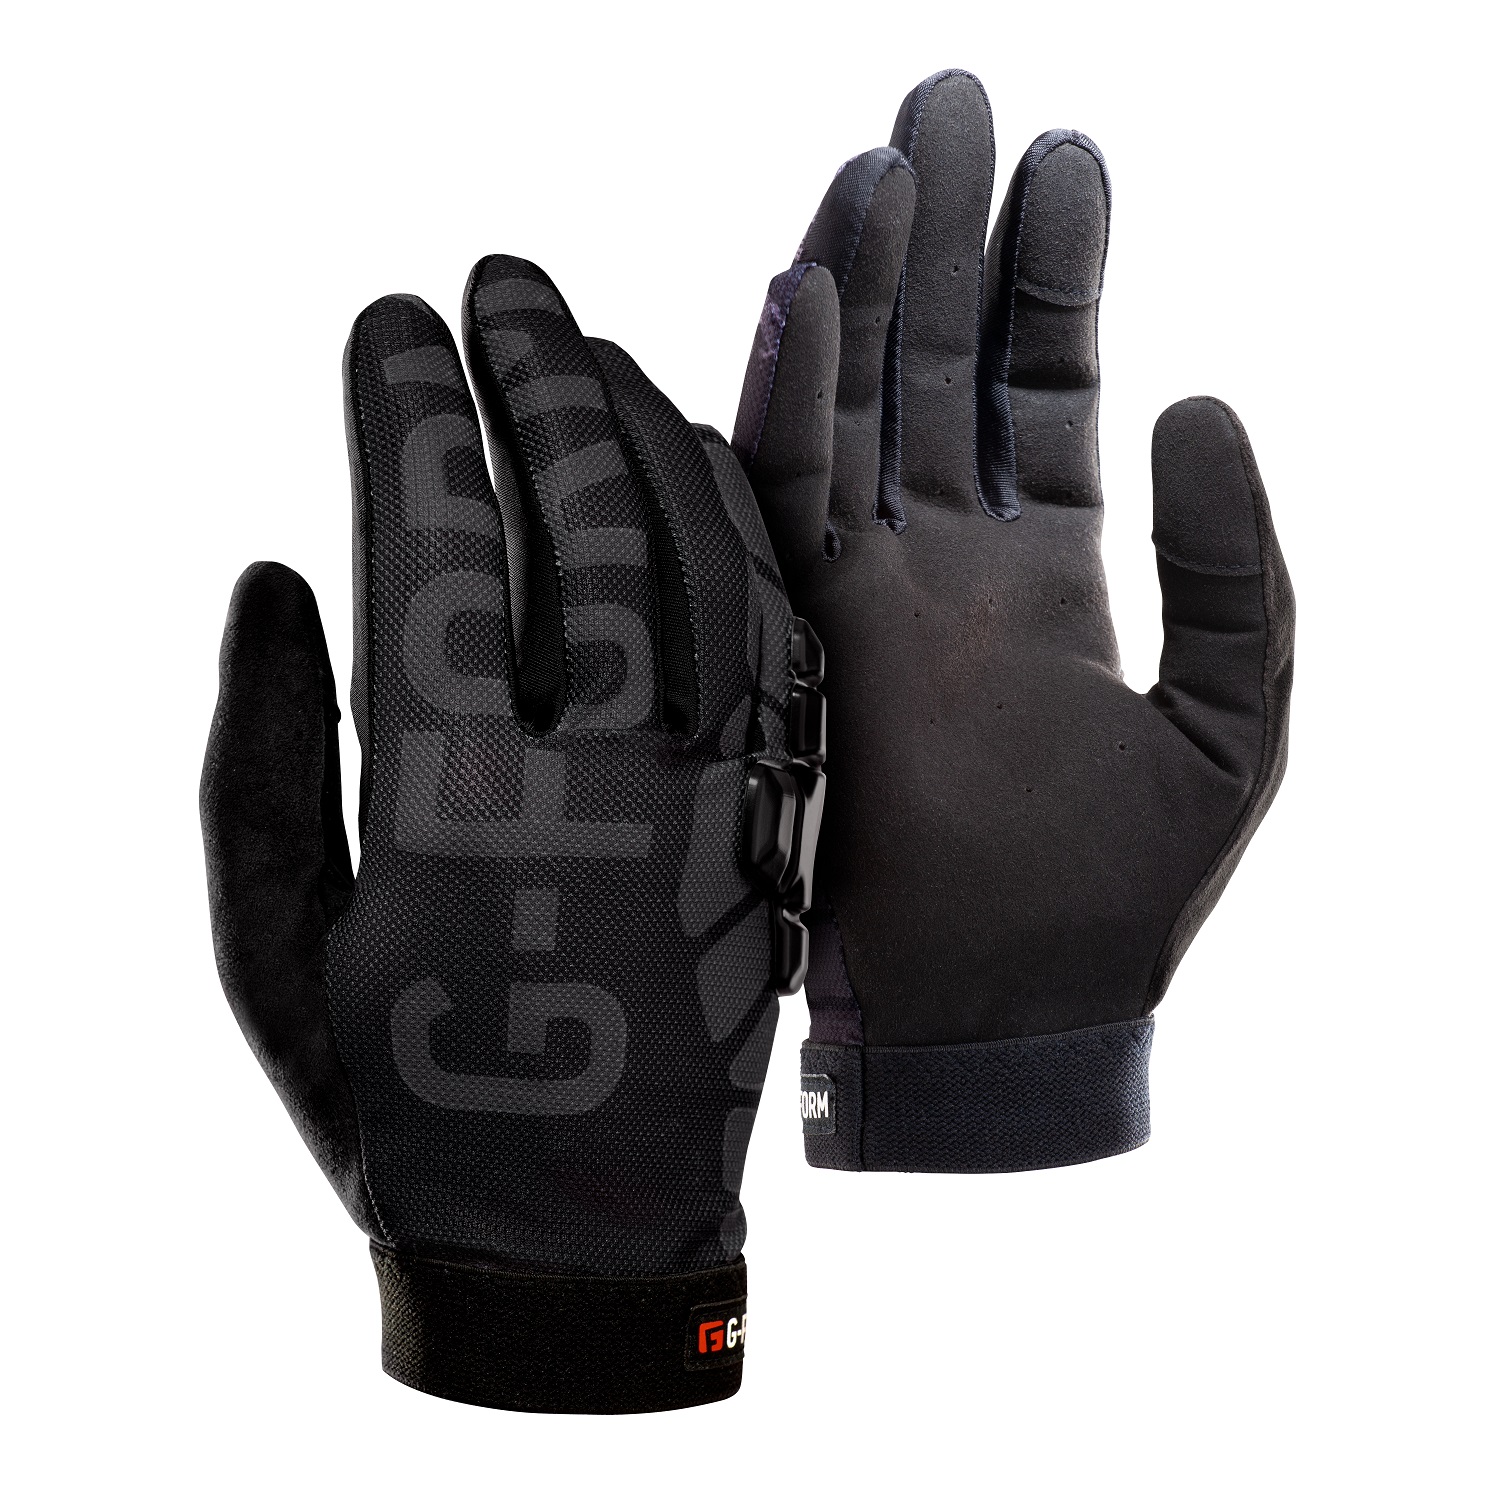 Sorata-trail-gants-black-grey